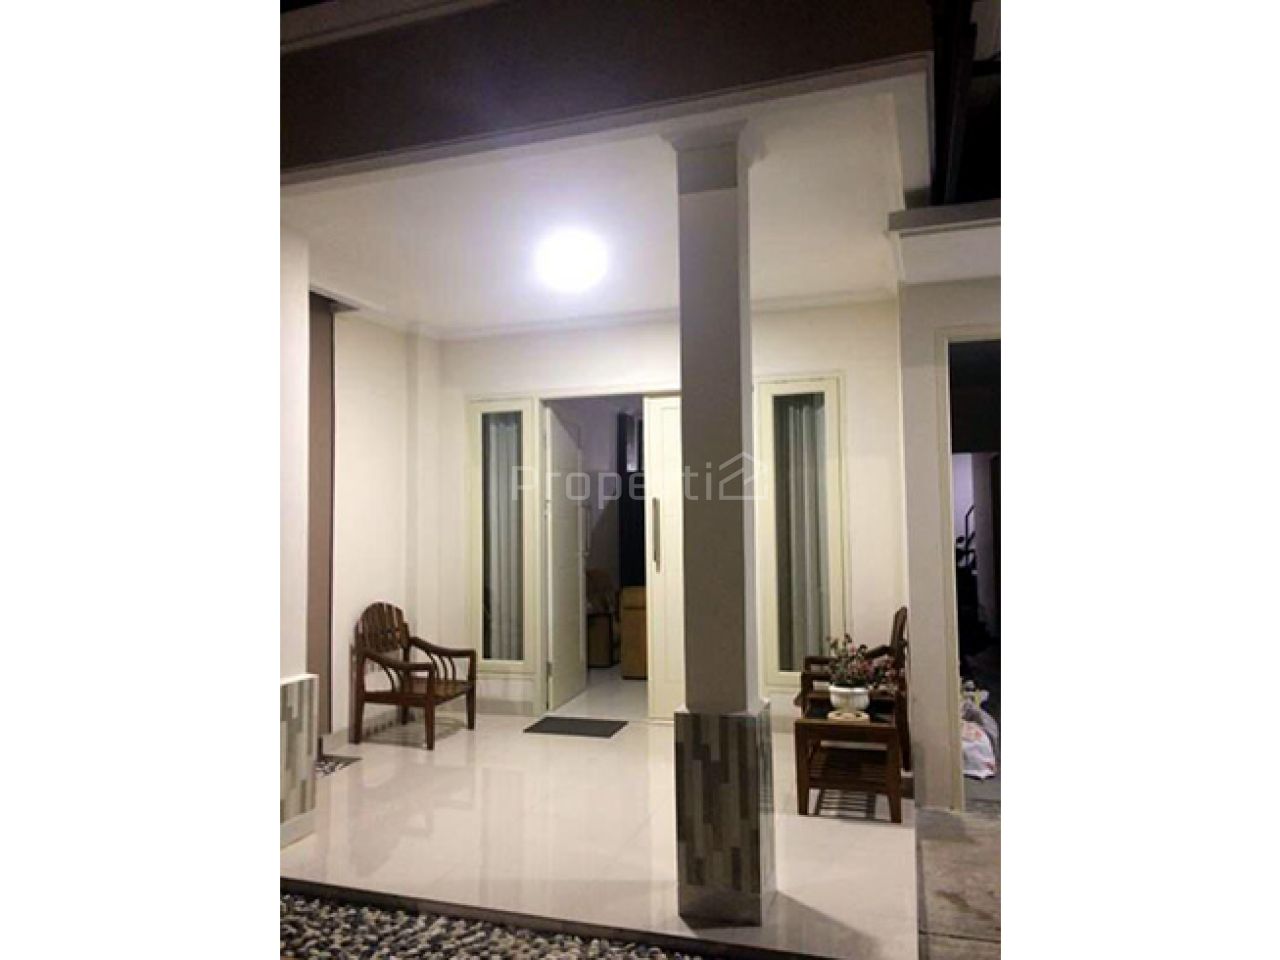 2-Storey House and Comfortable Environment in Srengseng, DKI Jakarta